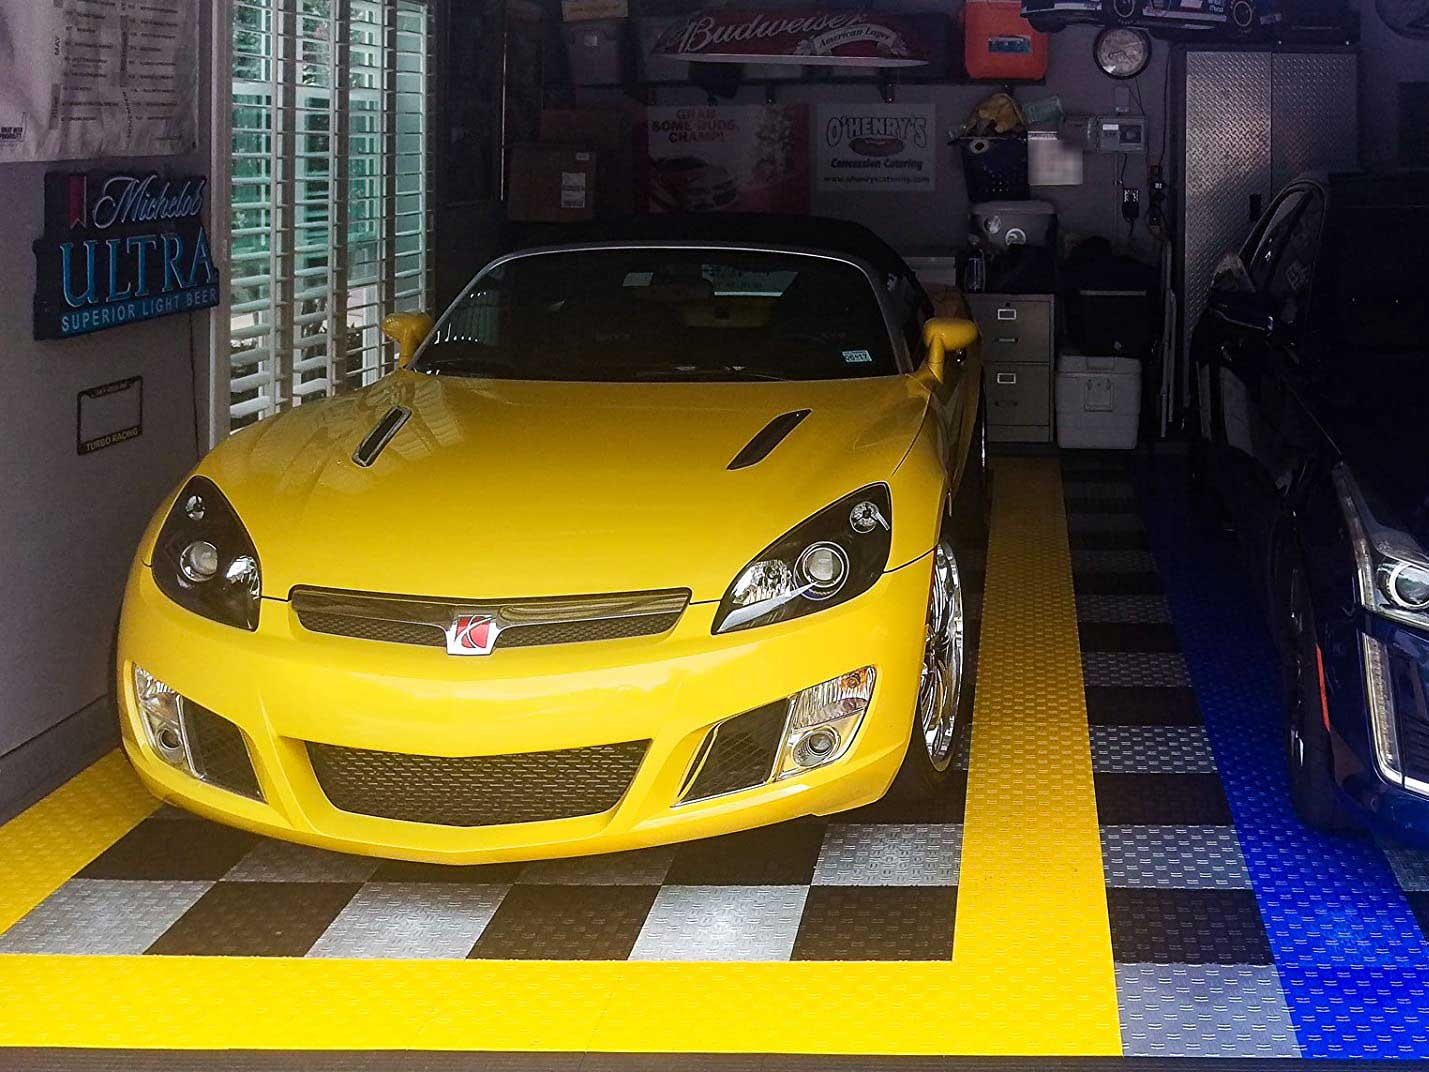 Garage mat tiles with car in garage